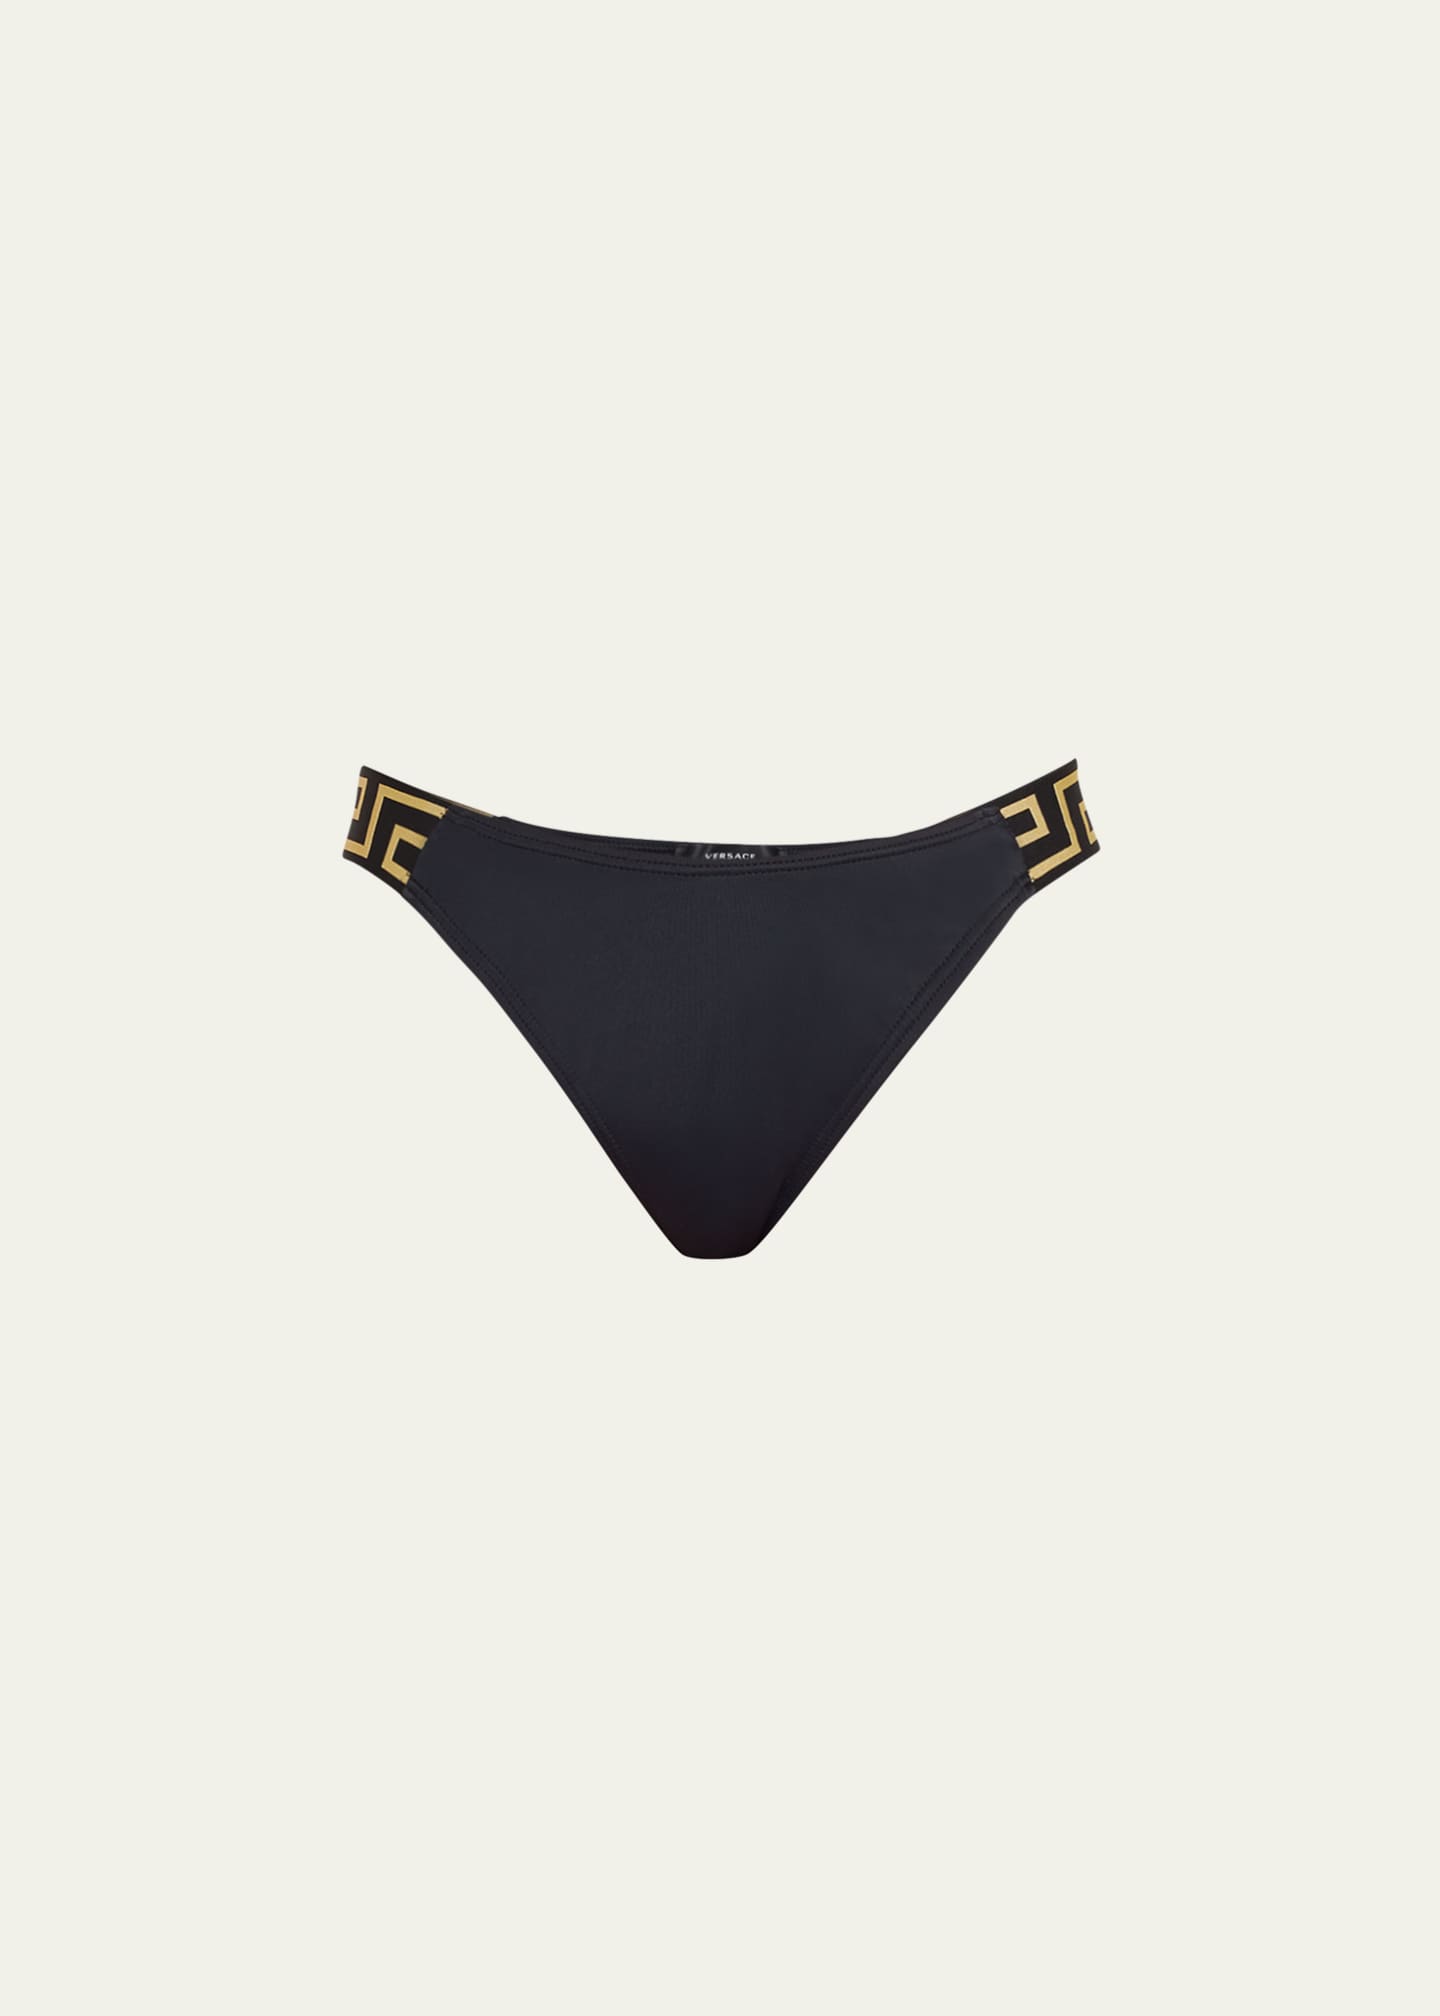 Black Greca Thong by Versace Underwear on Sale